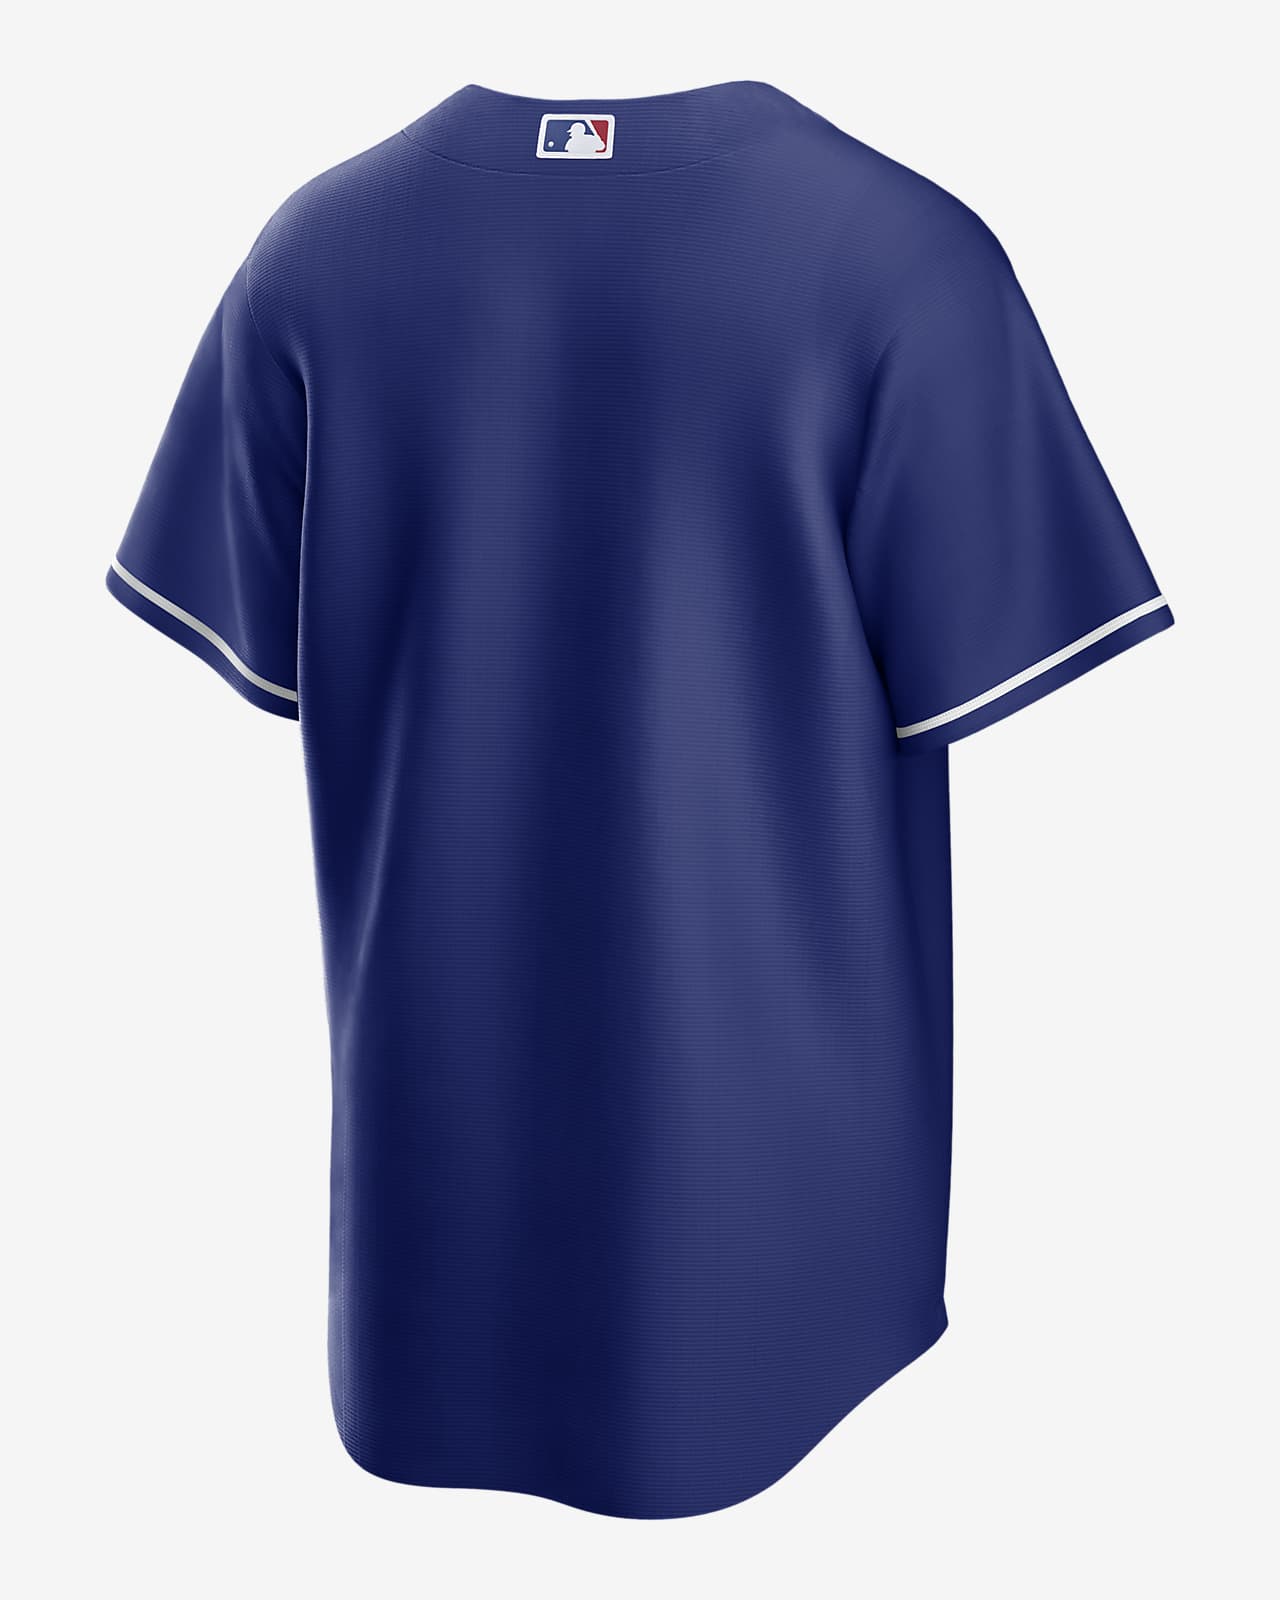 navy blue dodgers jersey